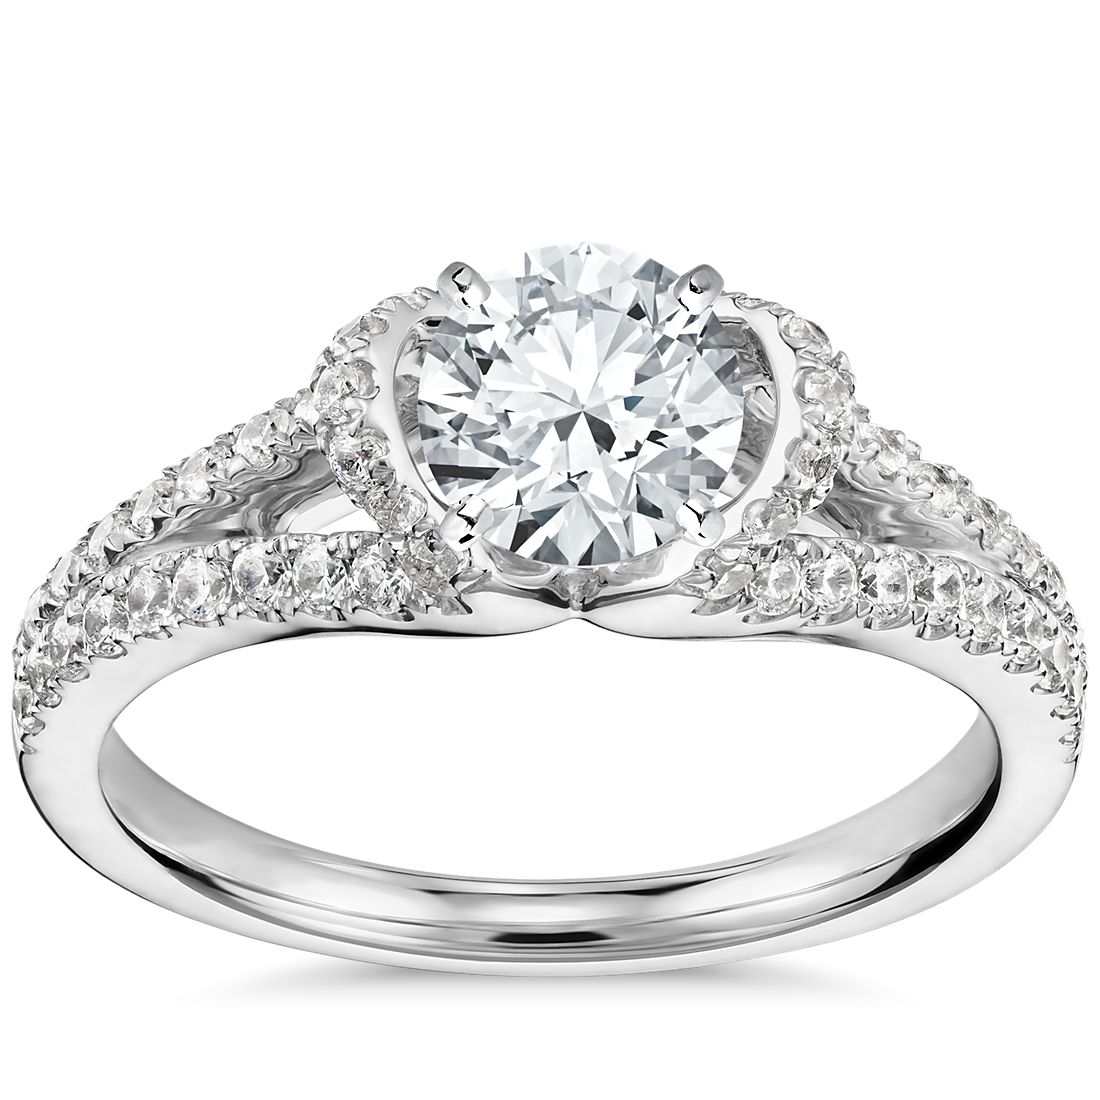 Truly Zac Posen Lotus Pavé Diamond Engagement Ring in Platinum Blue Nile